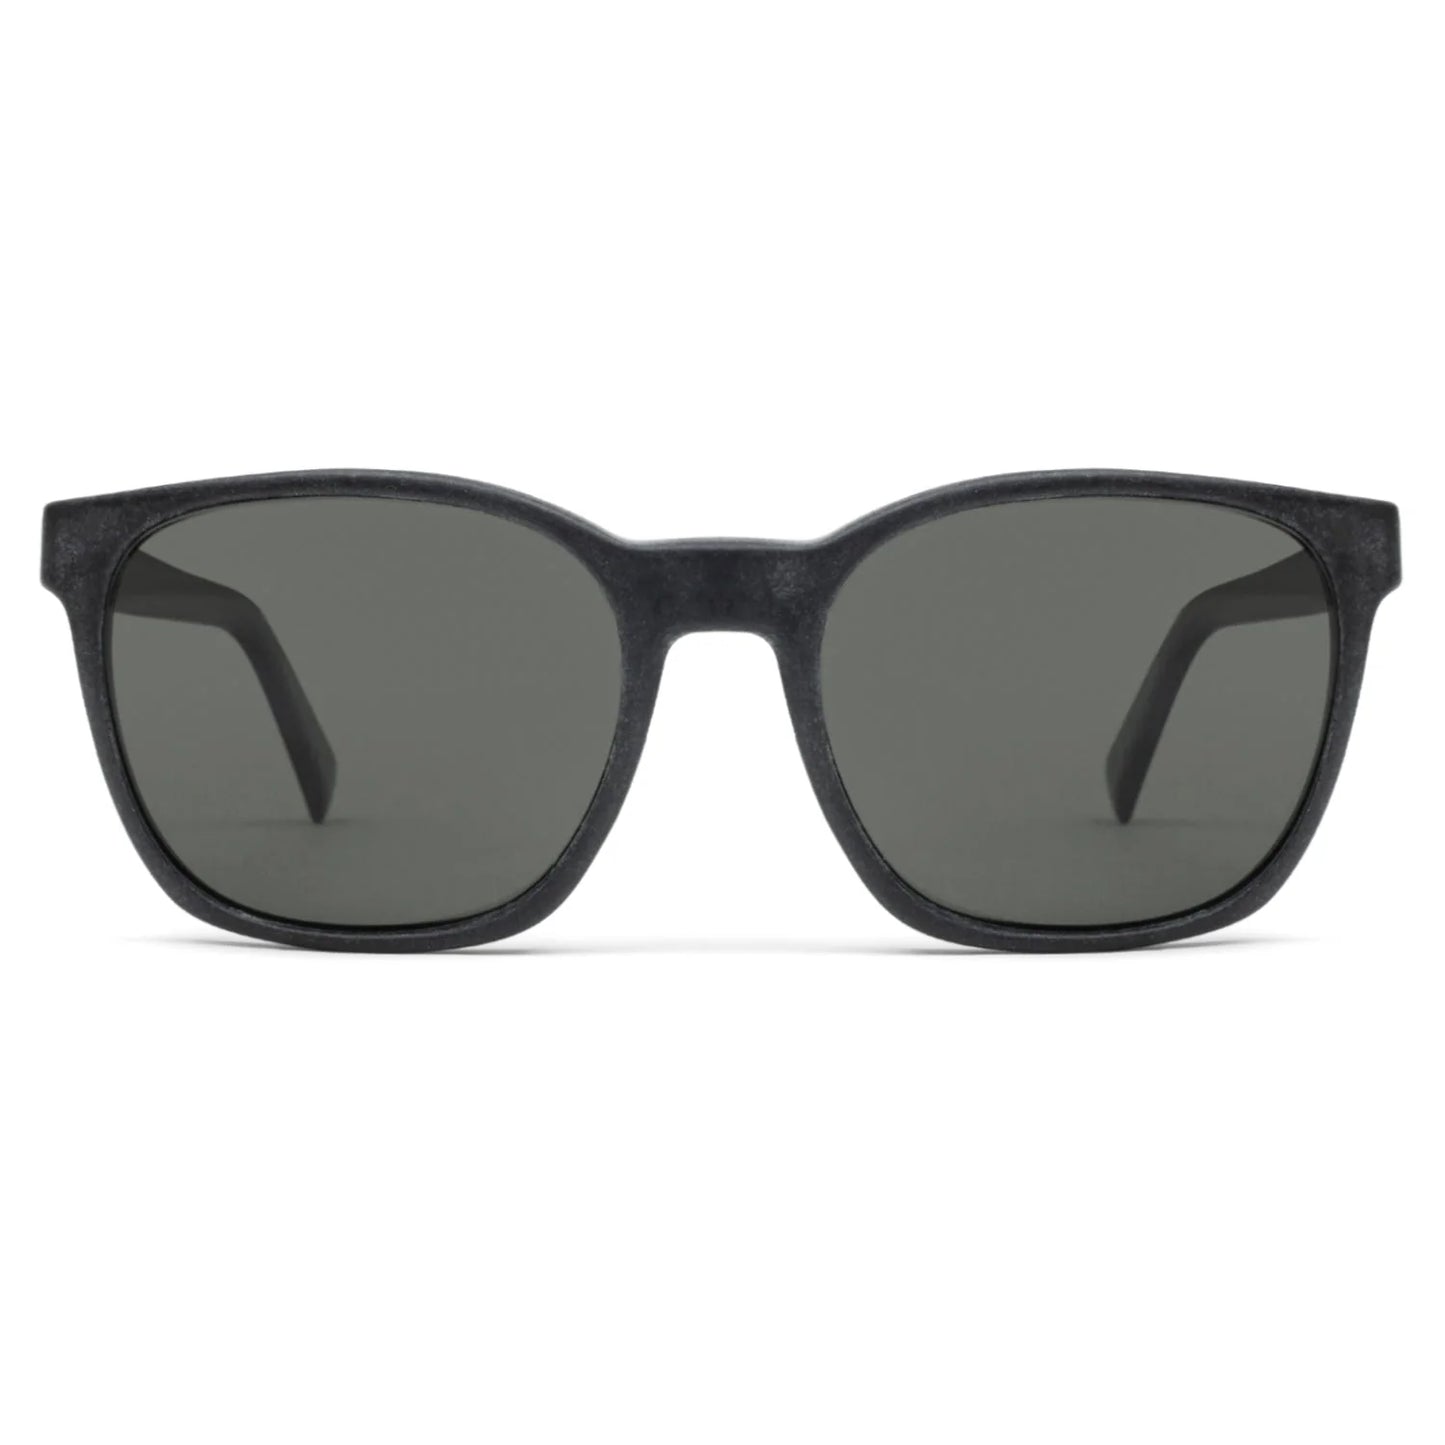 Fitzroy Blue Slate Waterhaul Sunglasses